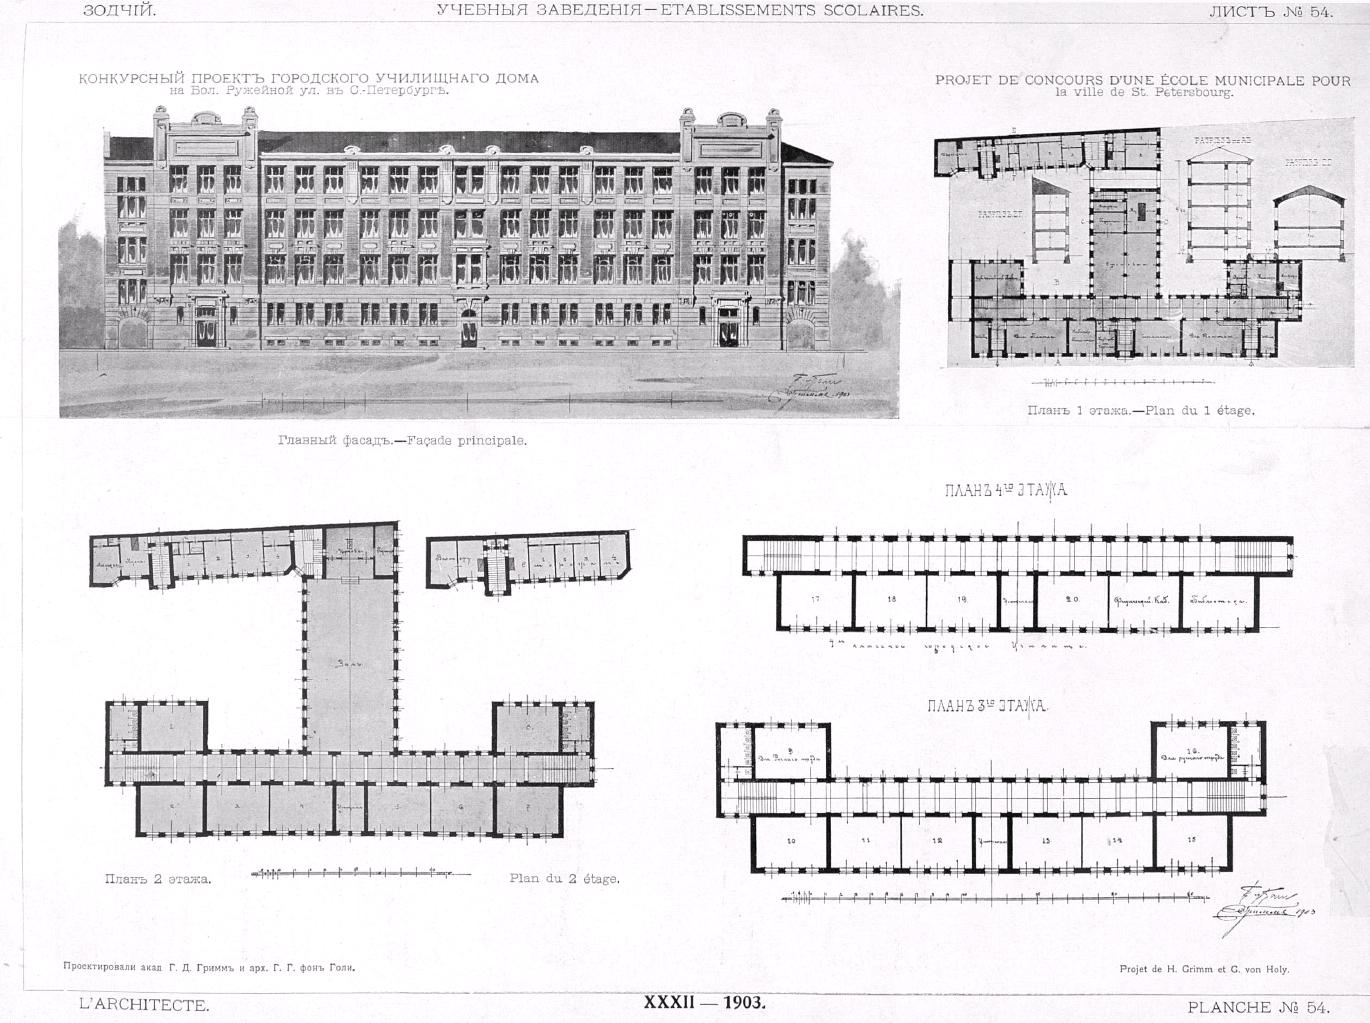 Проект Училищного дома имени Пушкина - Зодчий, 1903, 44, лист 54